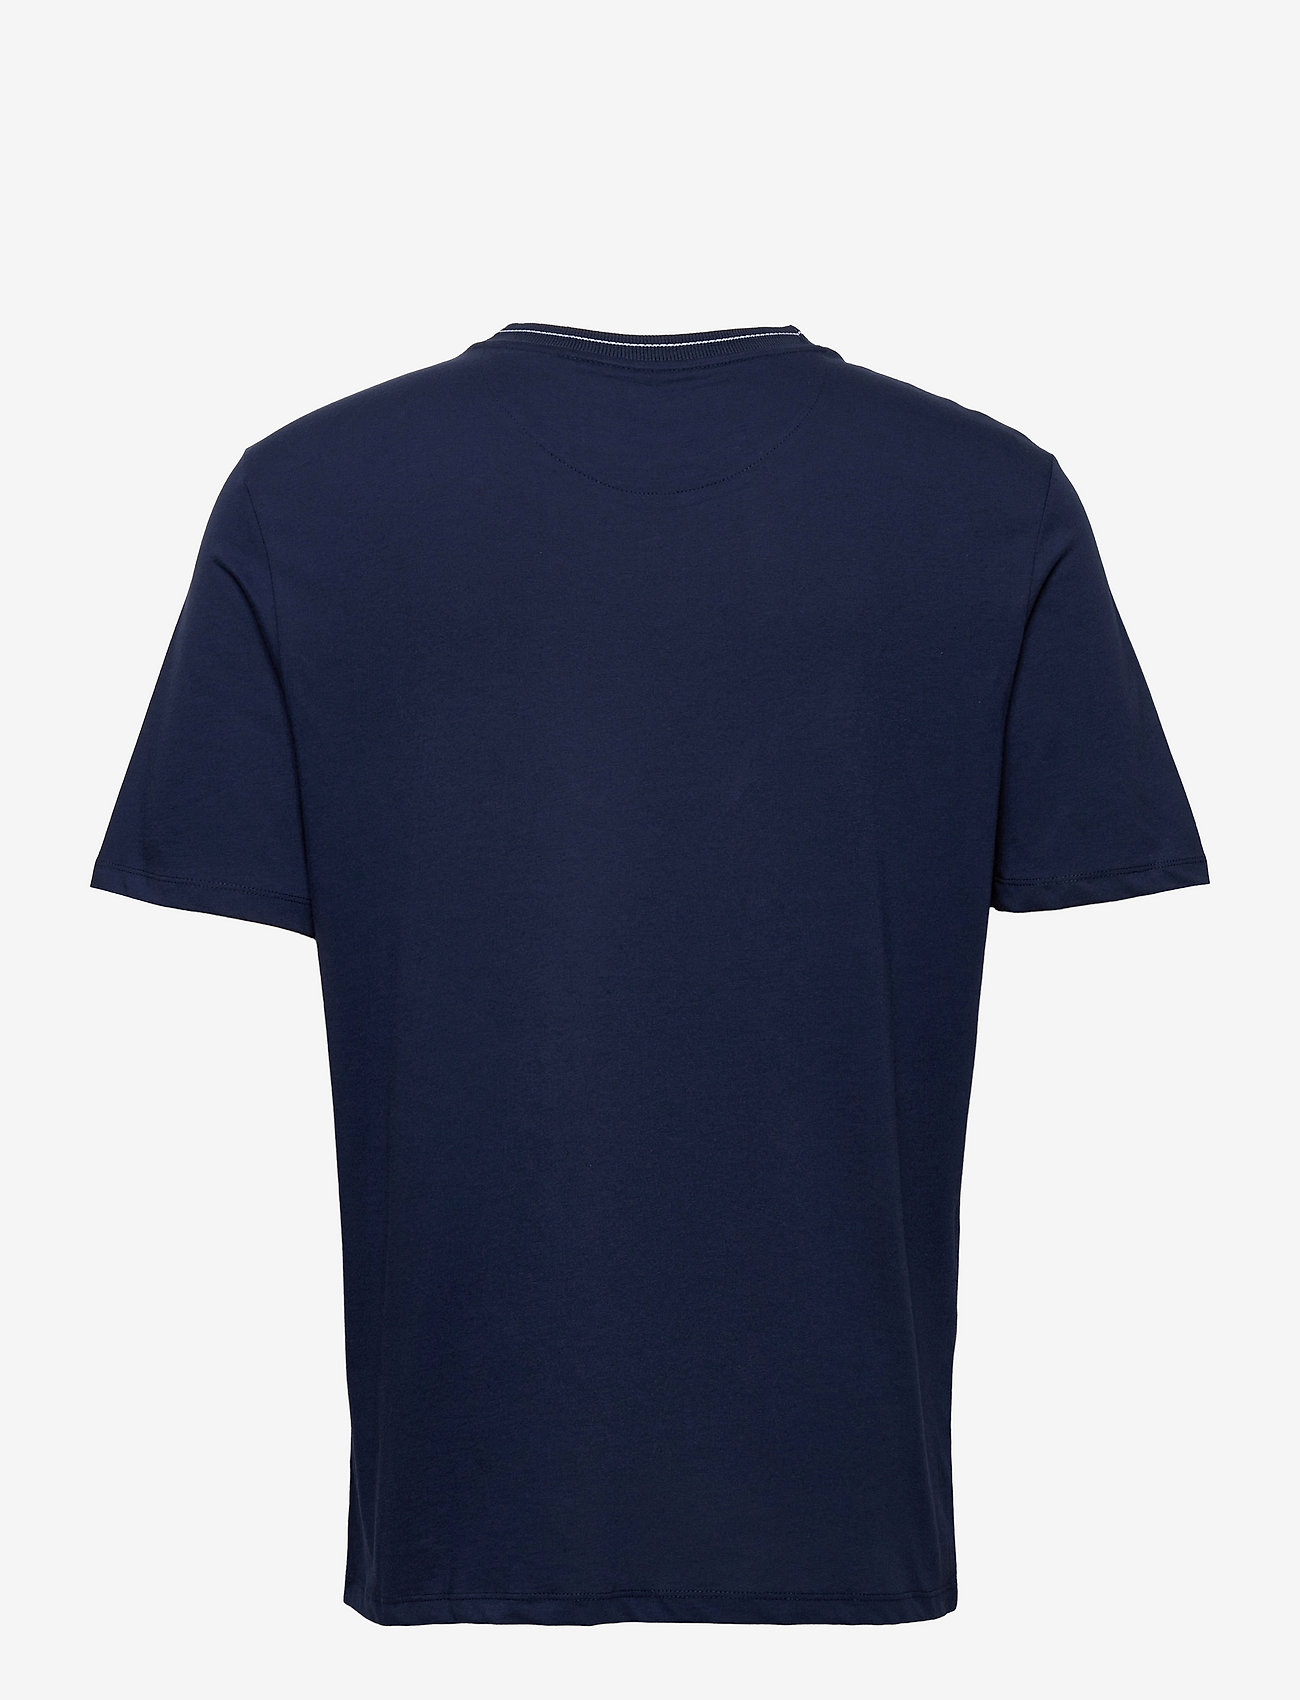 Lyle & Scott - Branded Ringer Tshirt - lowest prices - navy - 1